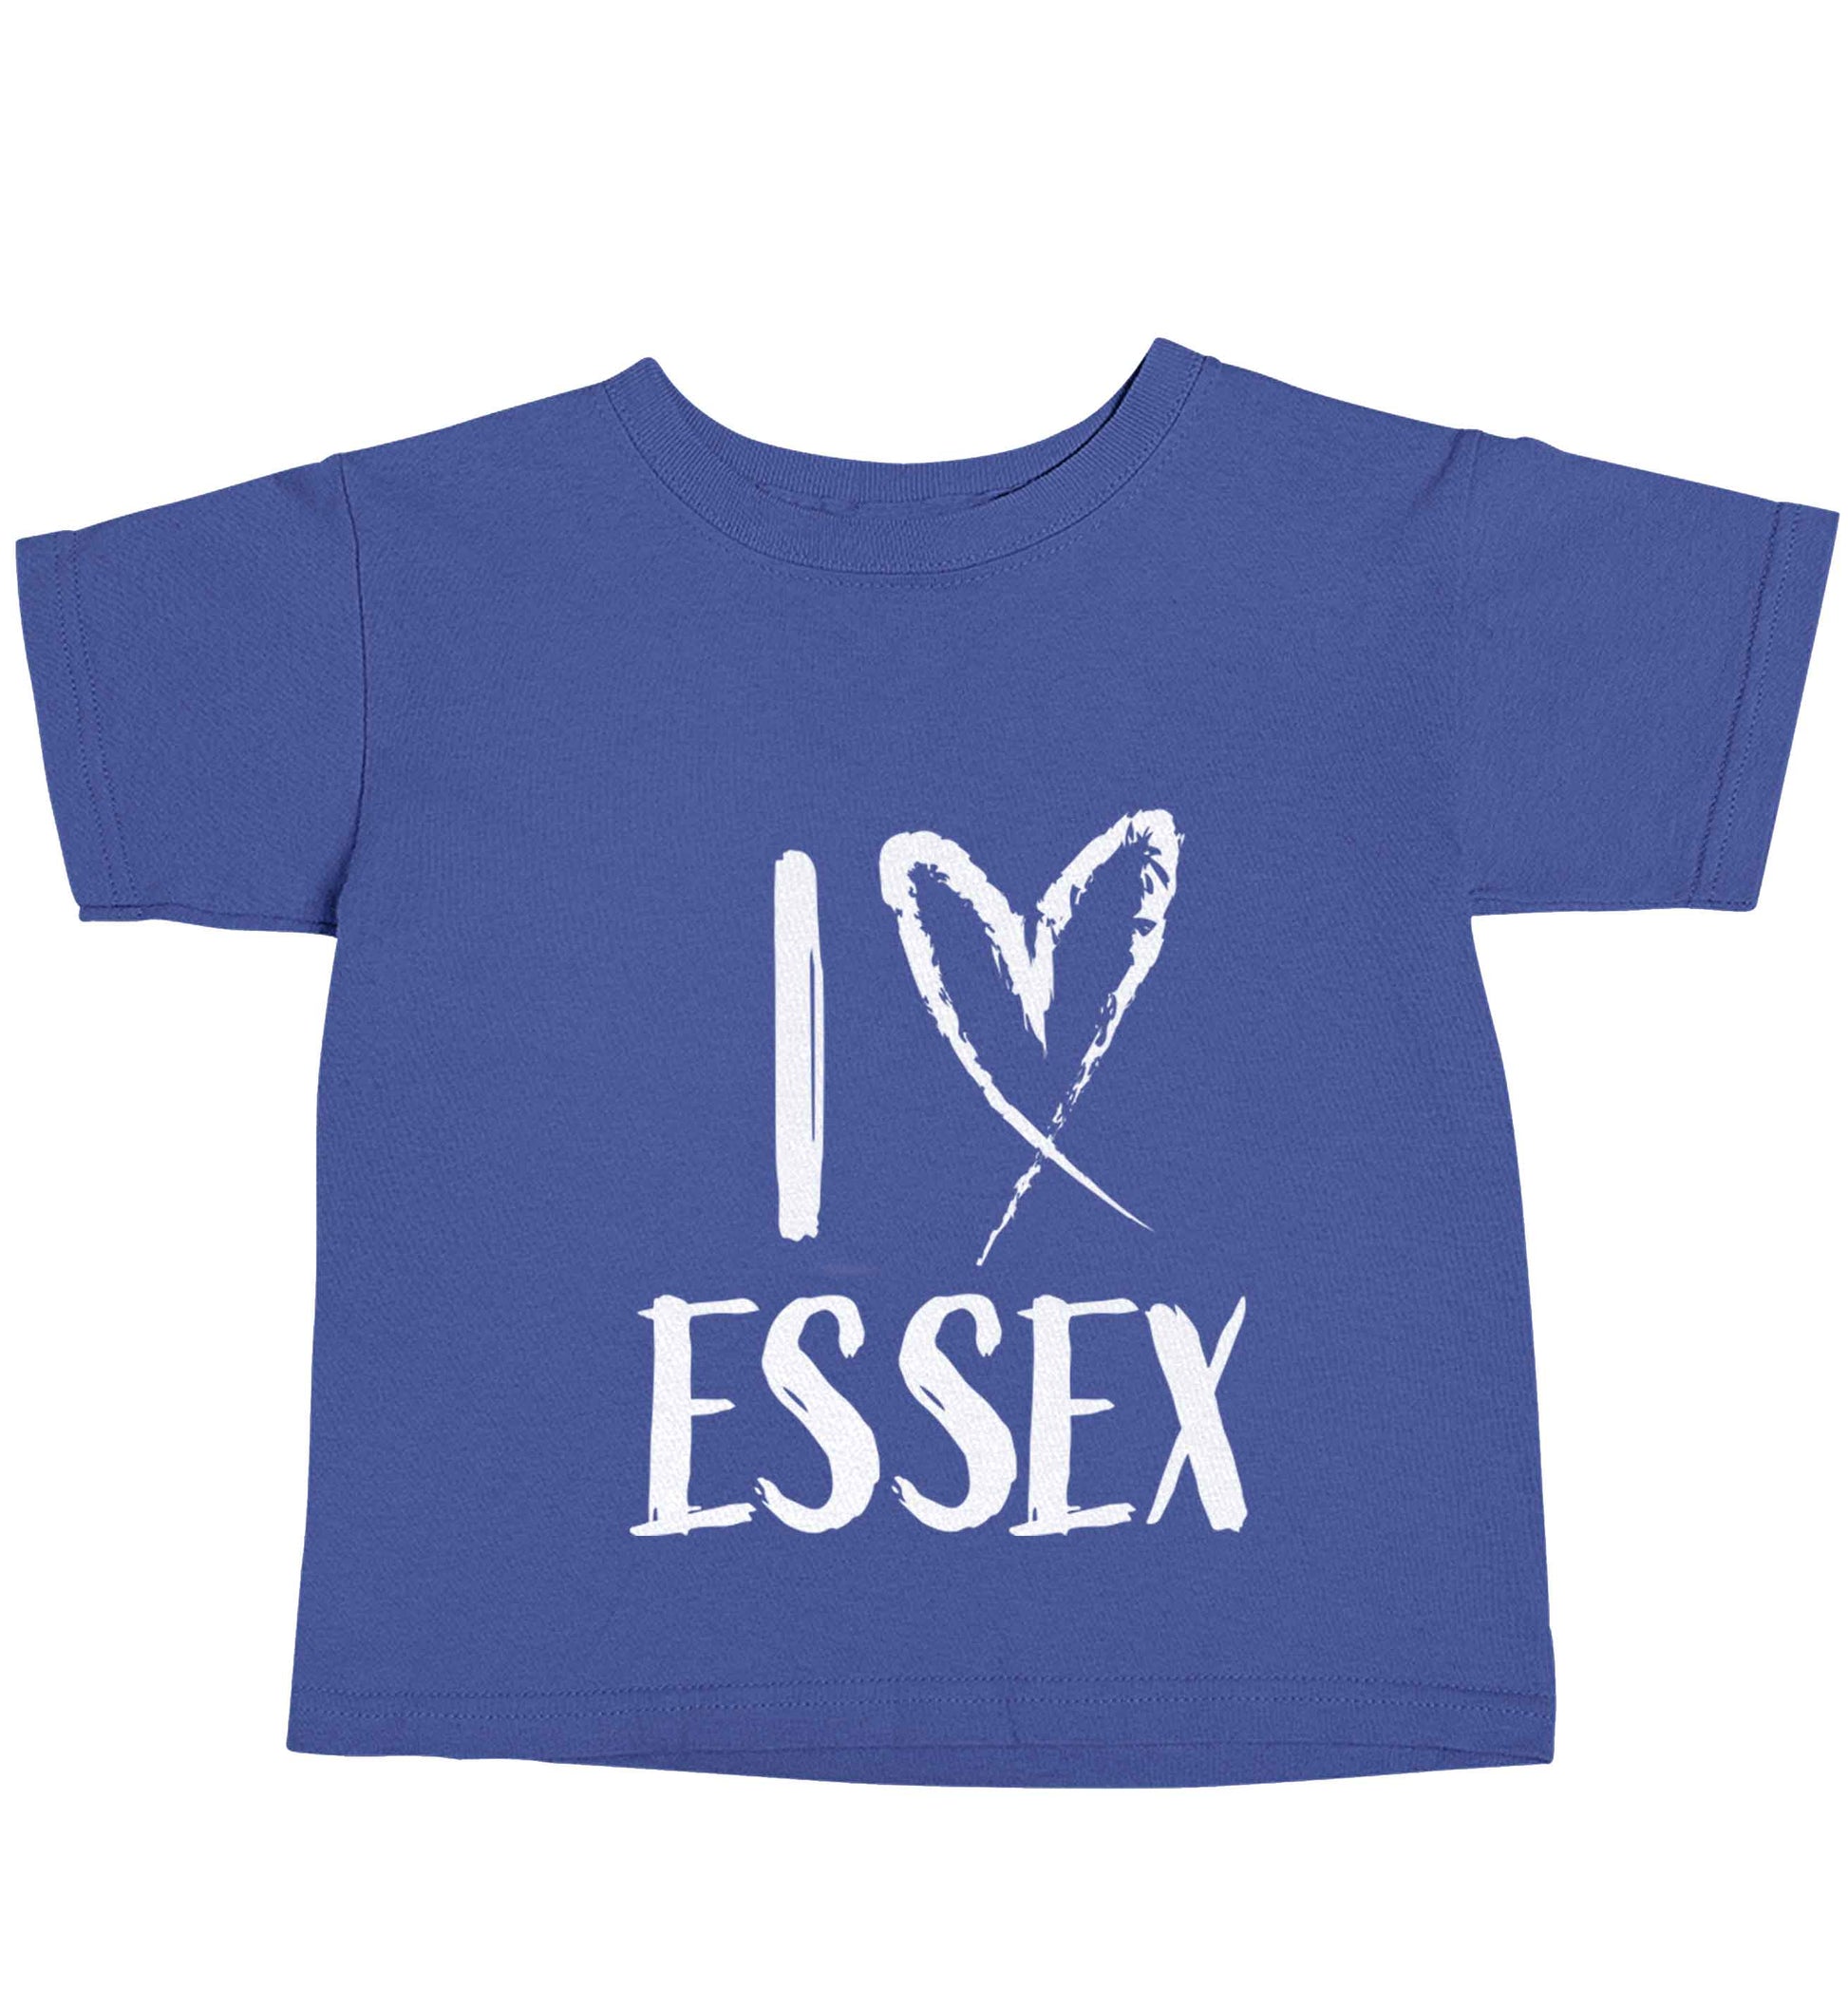 I love Essex blue baby toddler Tshirt 2 Years